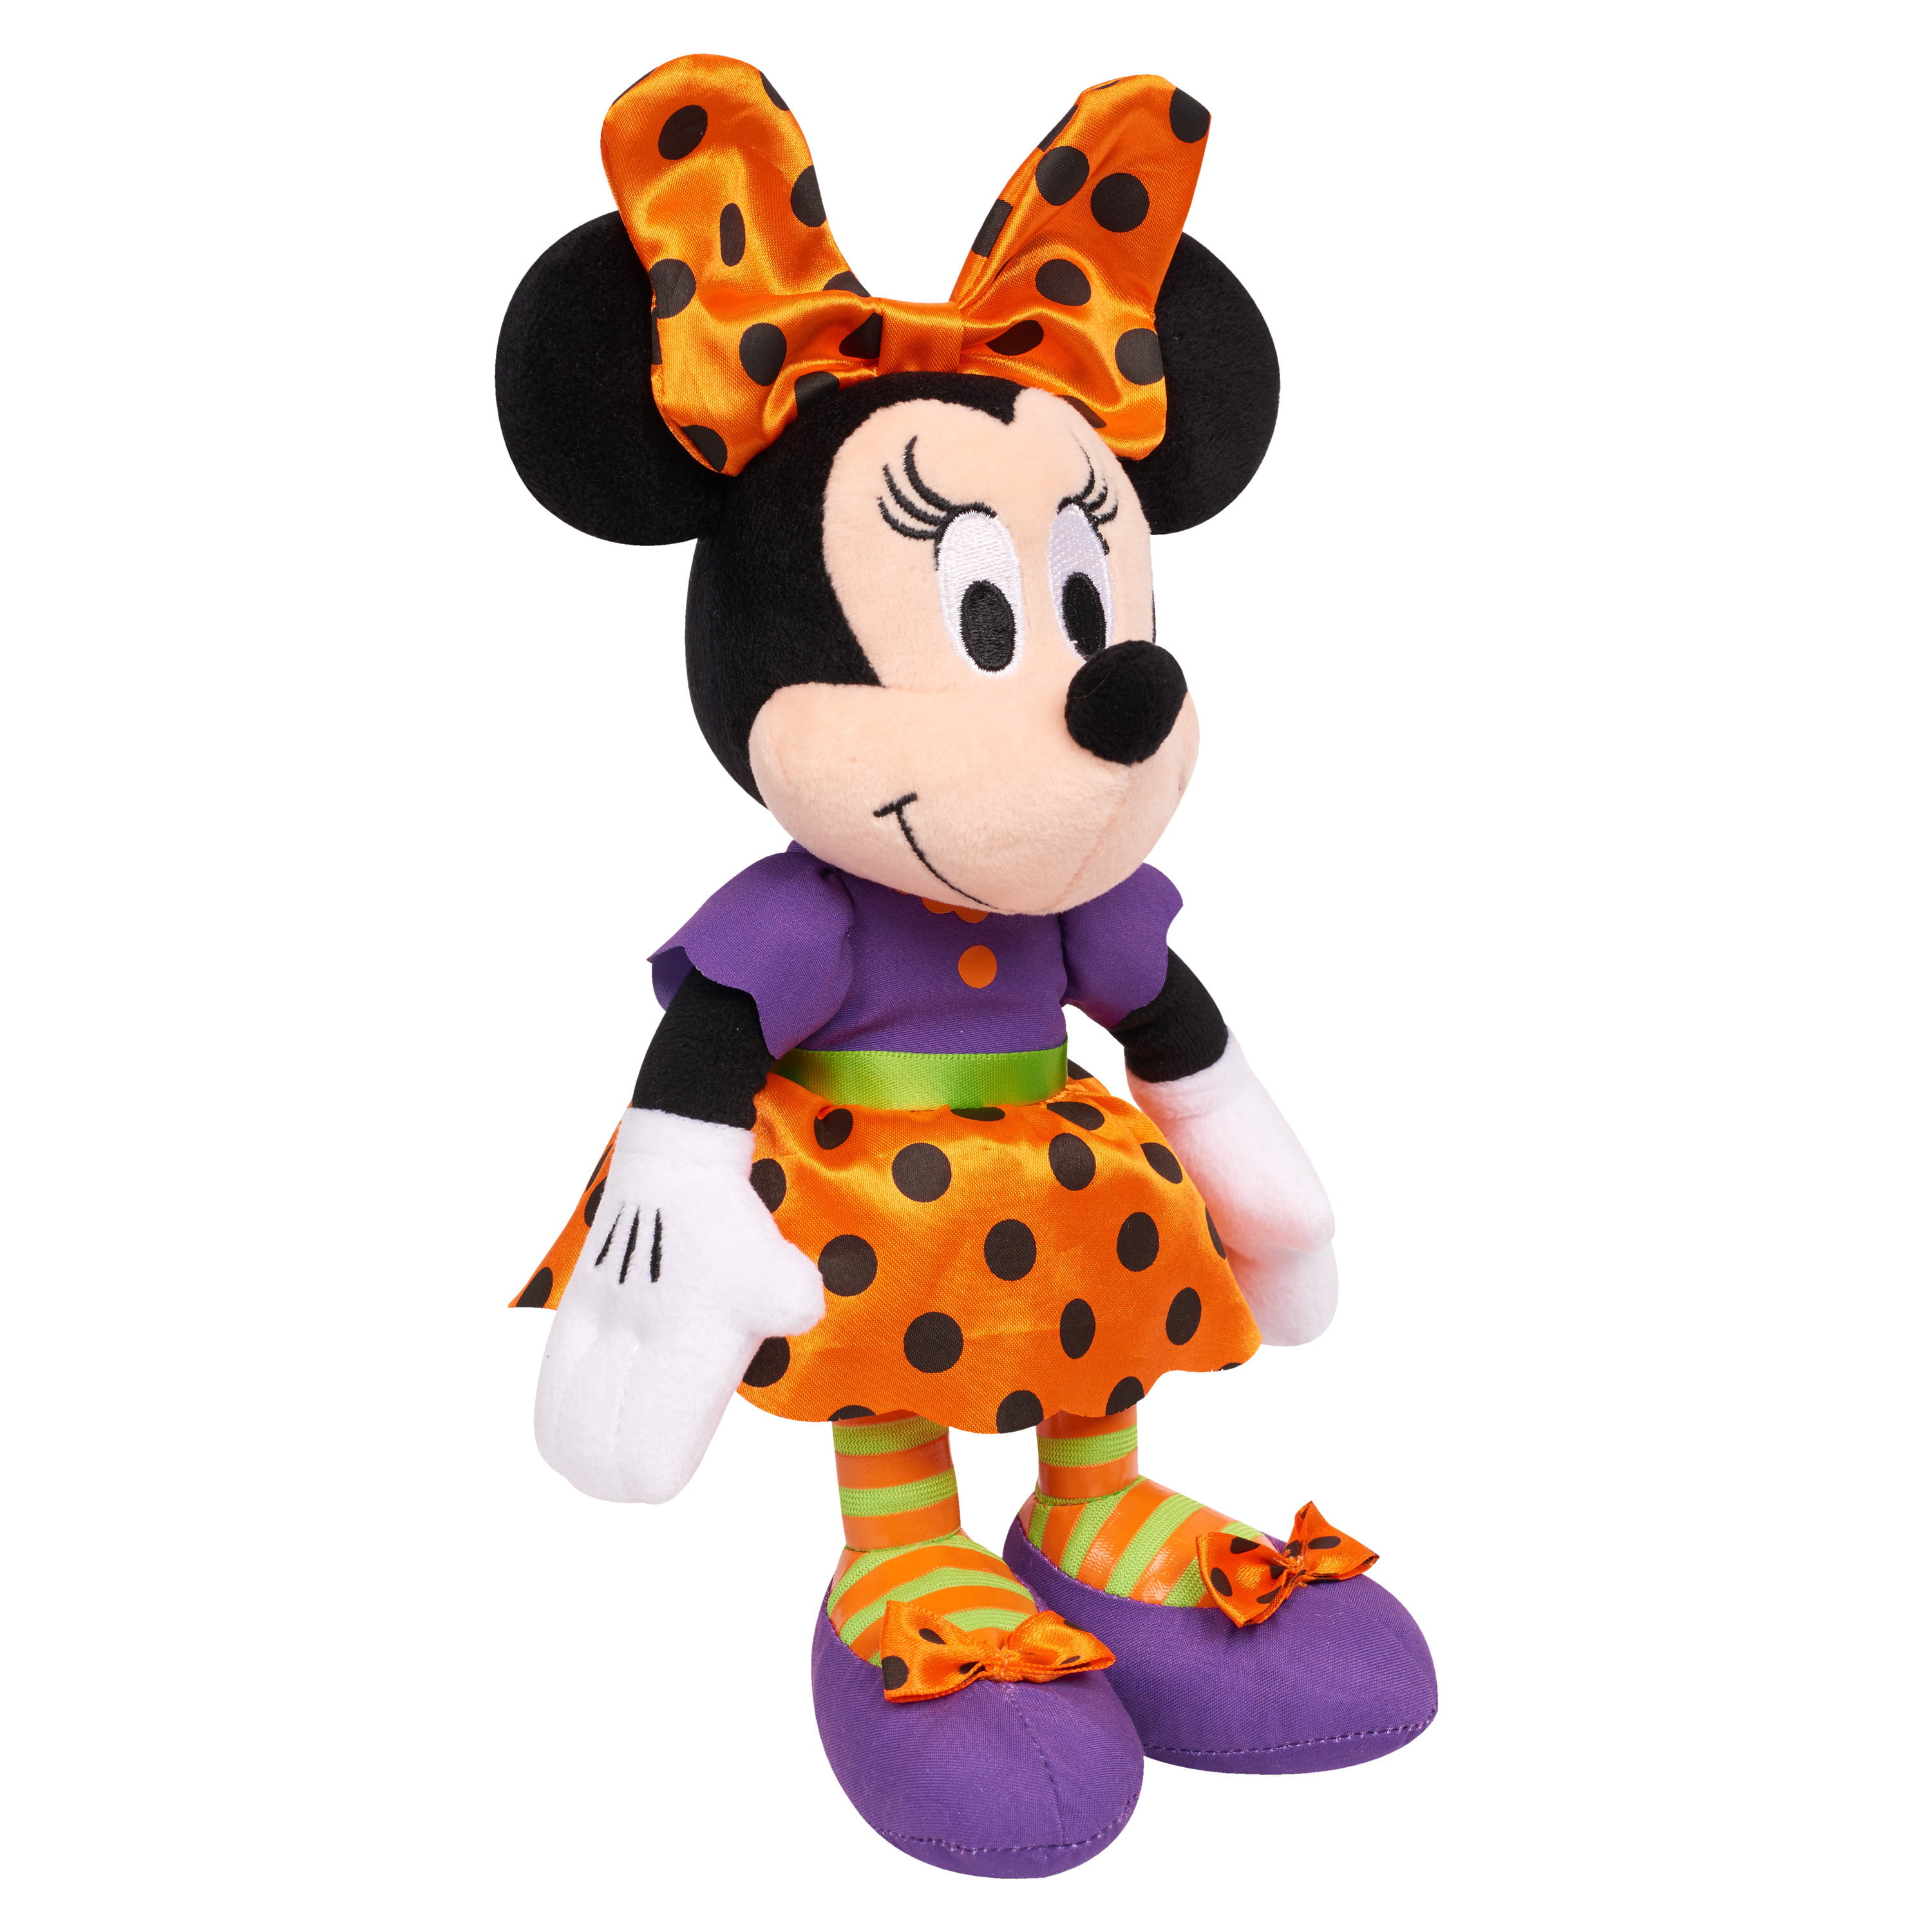 Disney - Minnie Mouse Plush Phunny